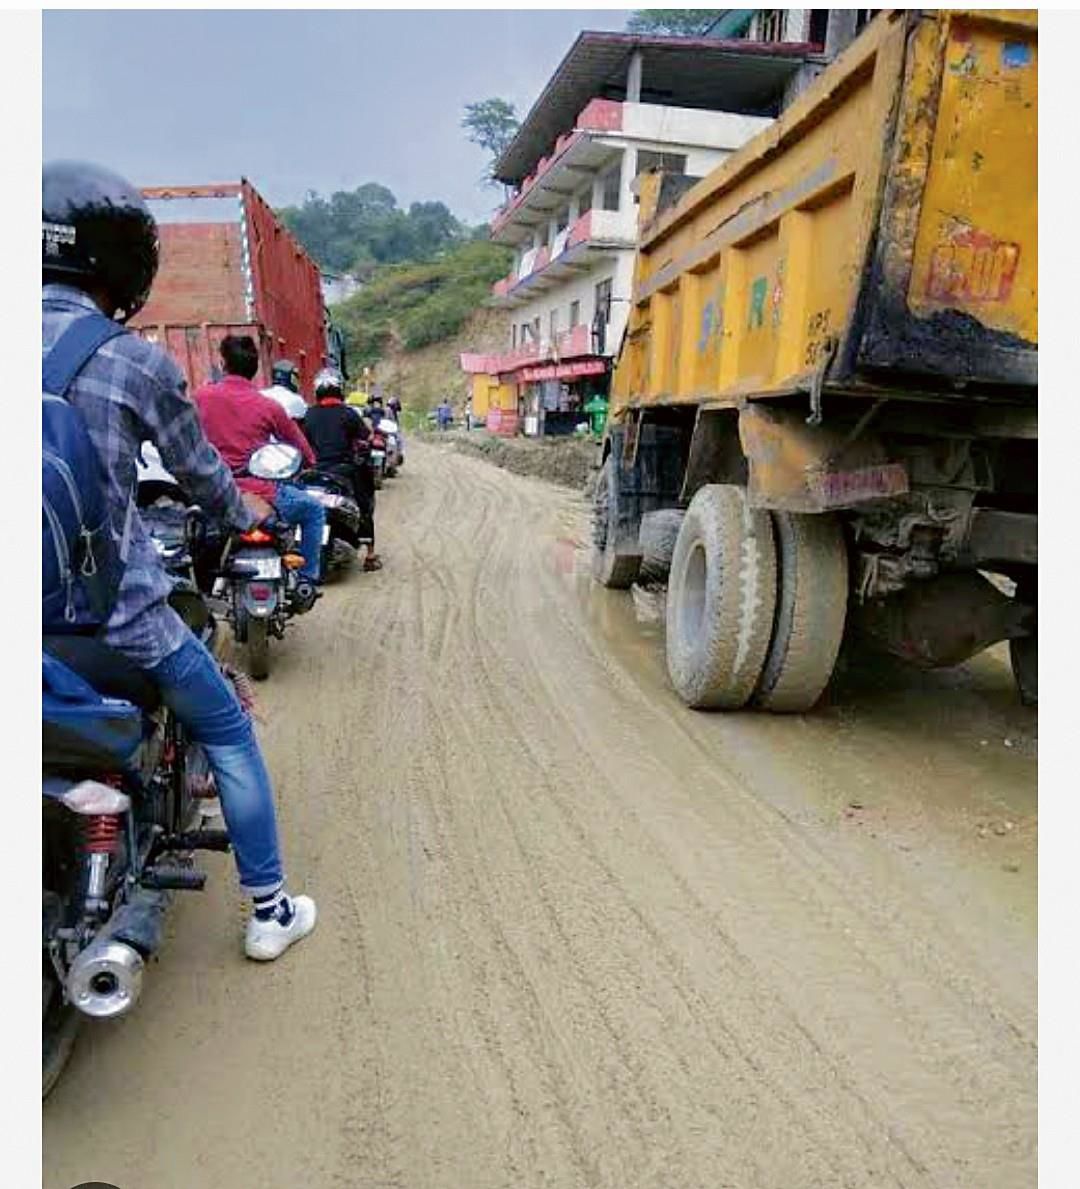 Speedy bikers turn narrow Palampur roads into pedestrians’ nightmare